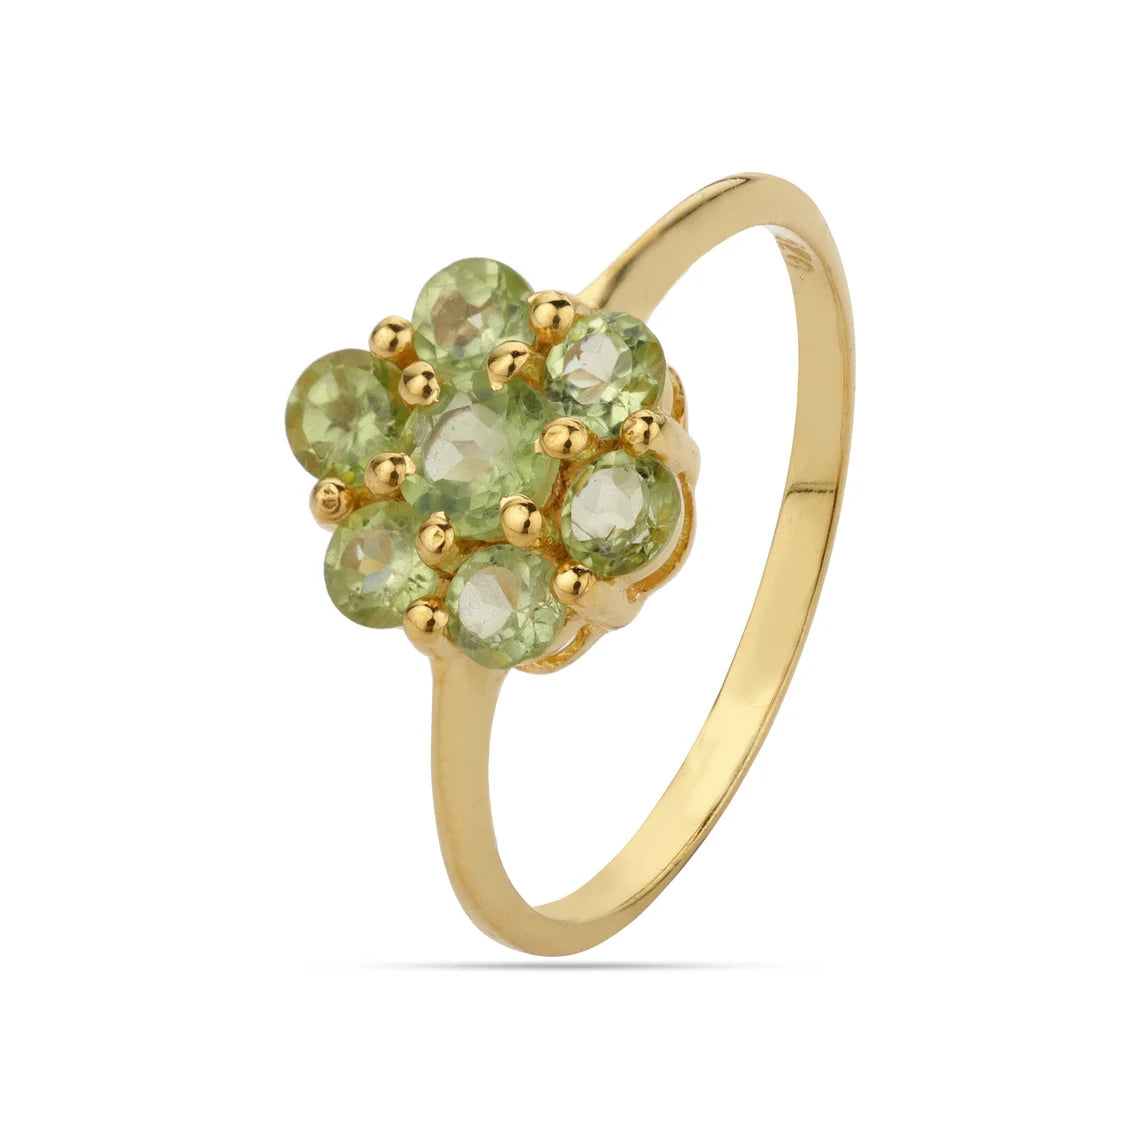 Handmade Sterling Silver Ring,-18k Gold Plated - Green Peridot Ring, Natural Peridot August Birthstone, Dainty Minimalist Women’s Gifting Jewelry